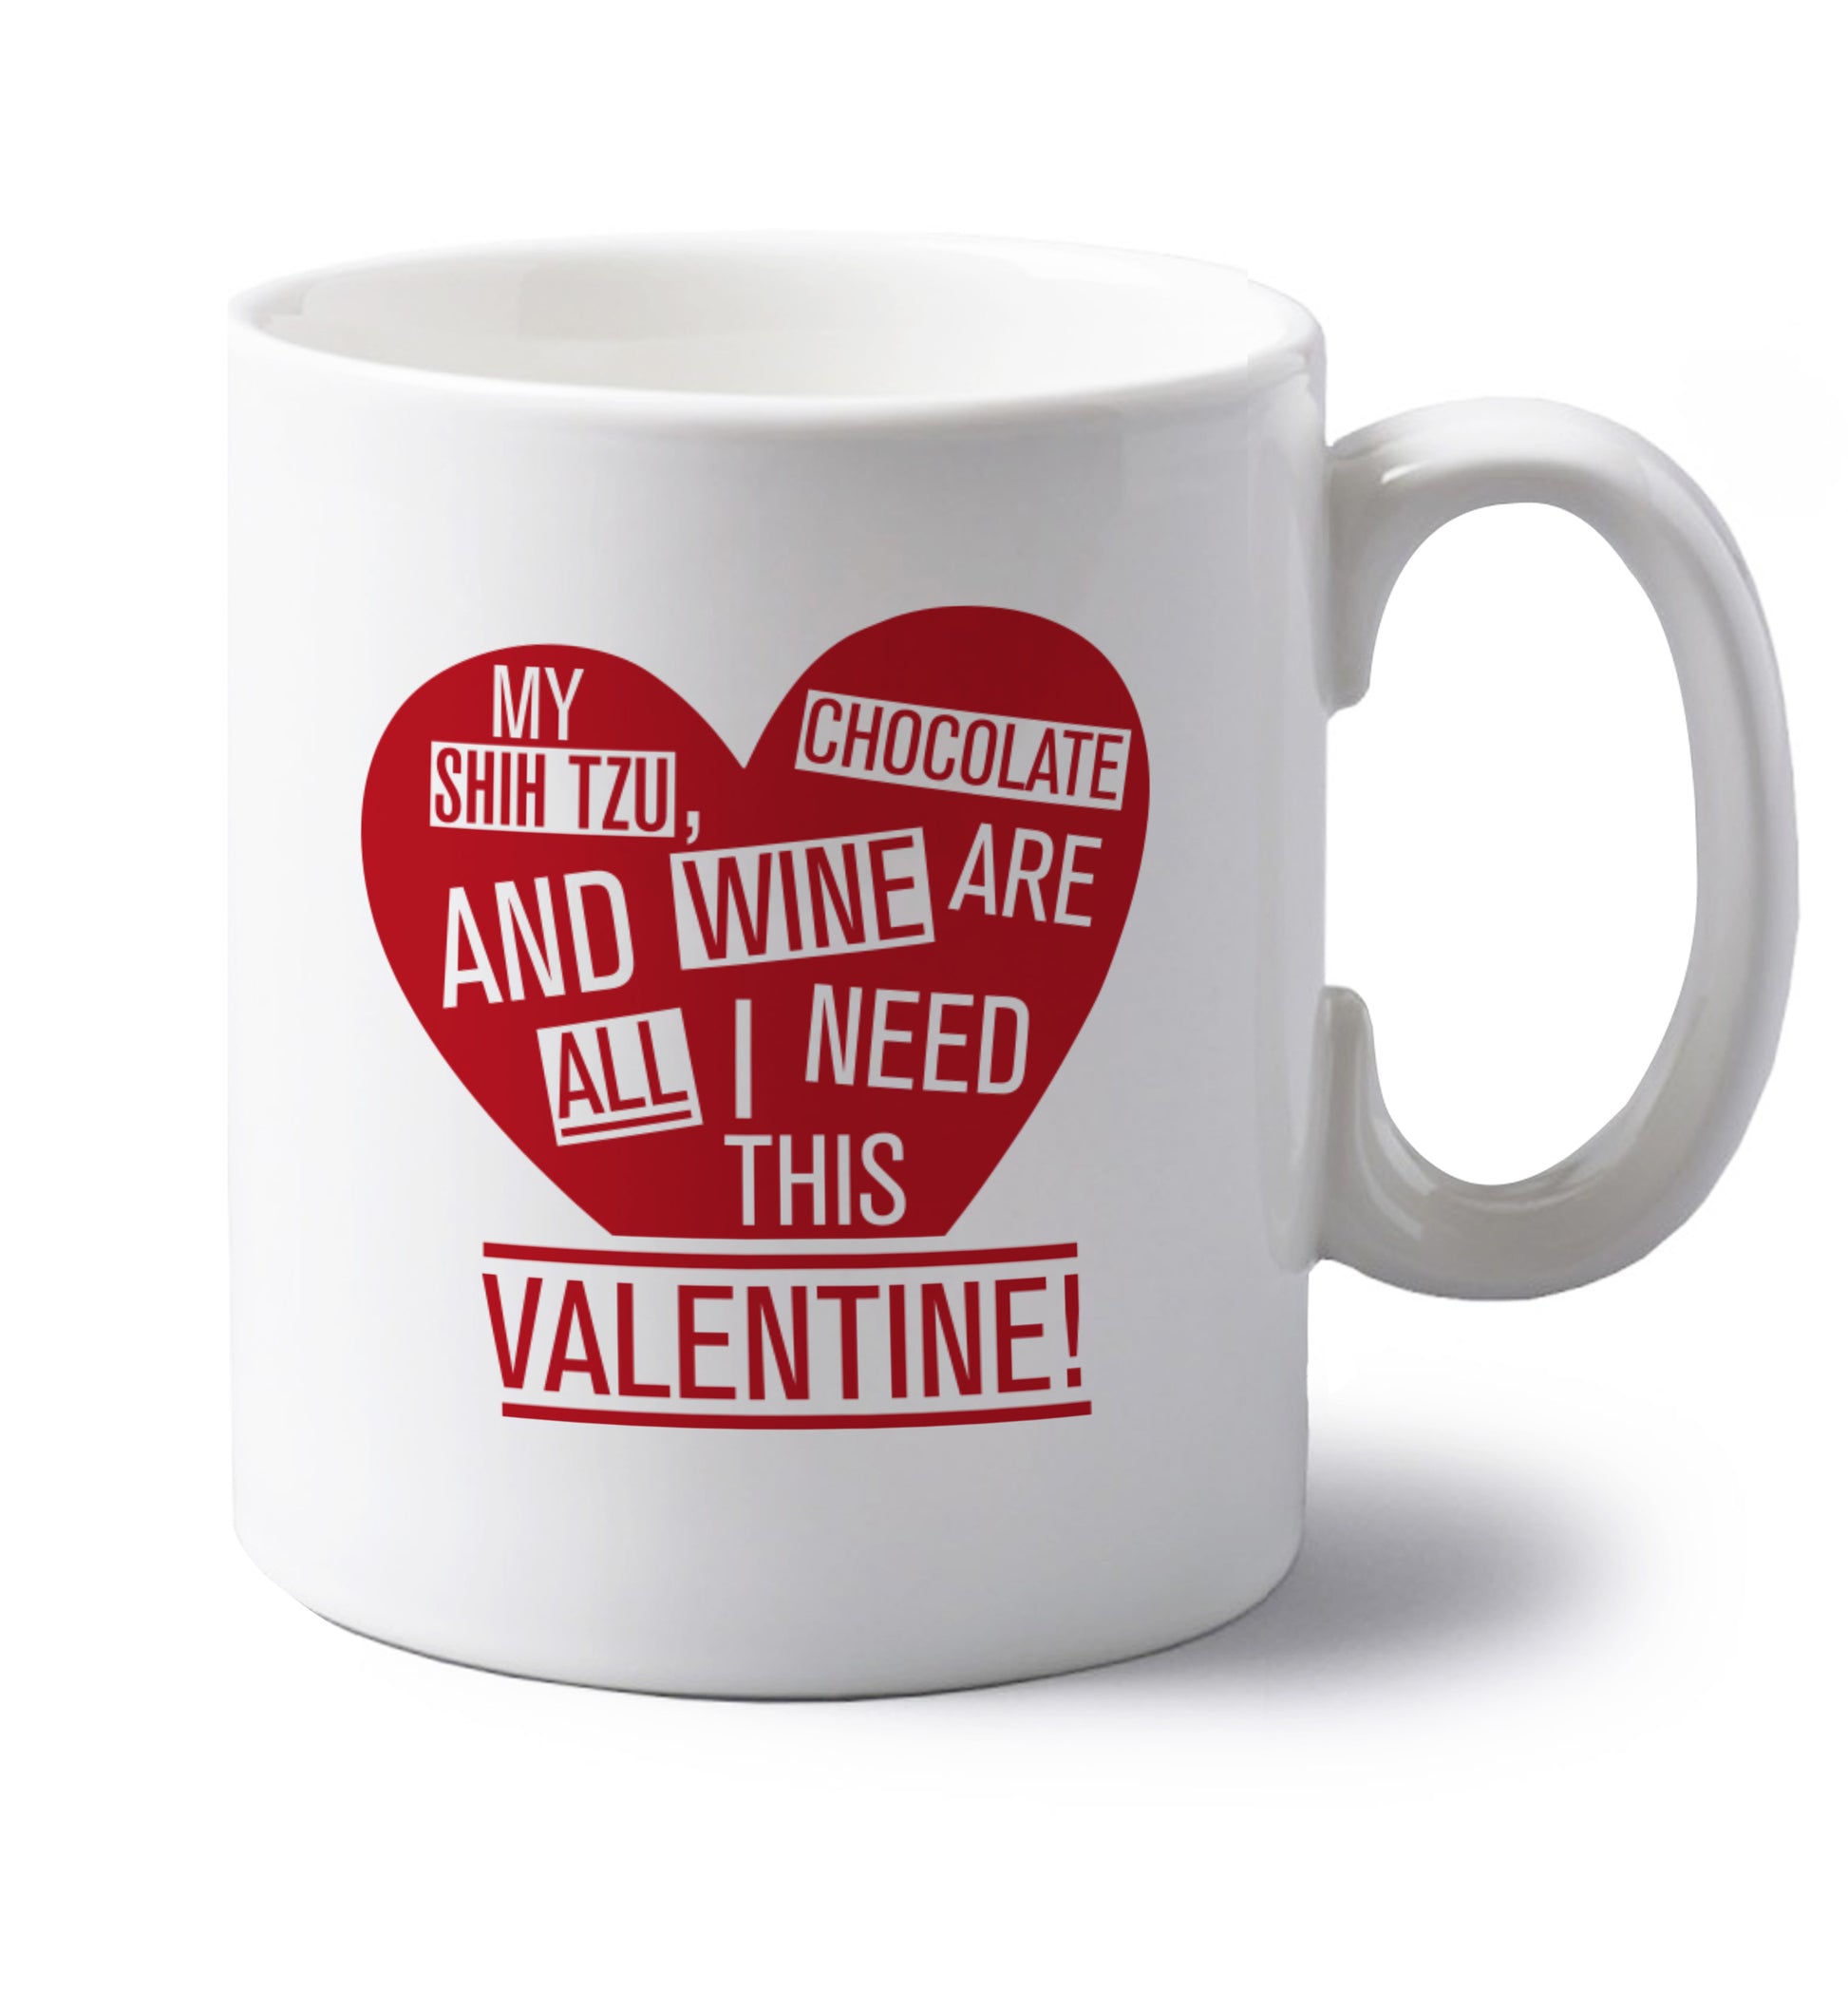 My shih tzu, chocolate and wine are all I need this valentine! left handed white ceramic mug 